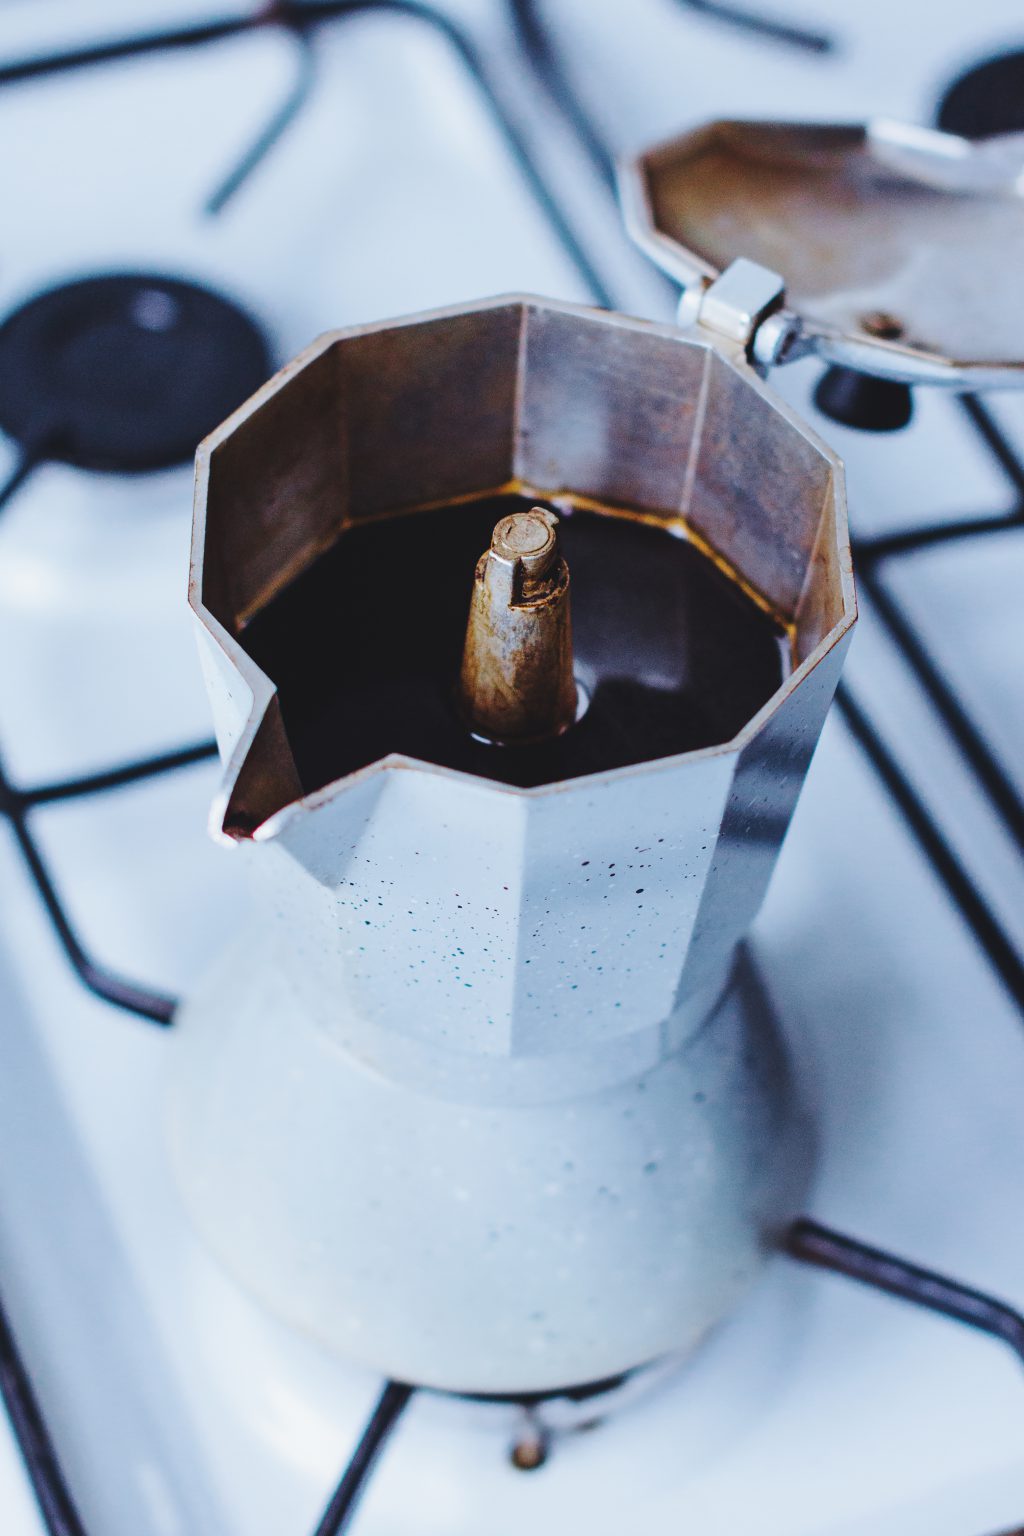 Brewing black coffee in a percolator - free stock photo